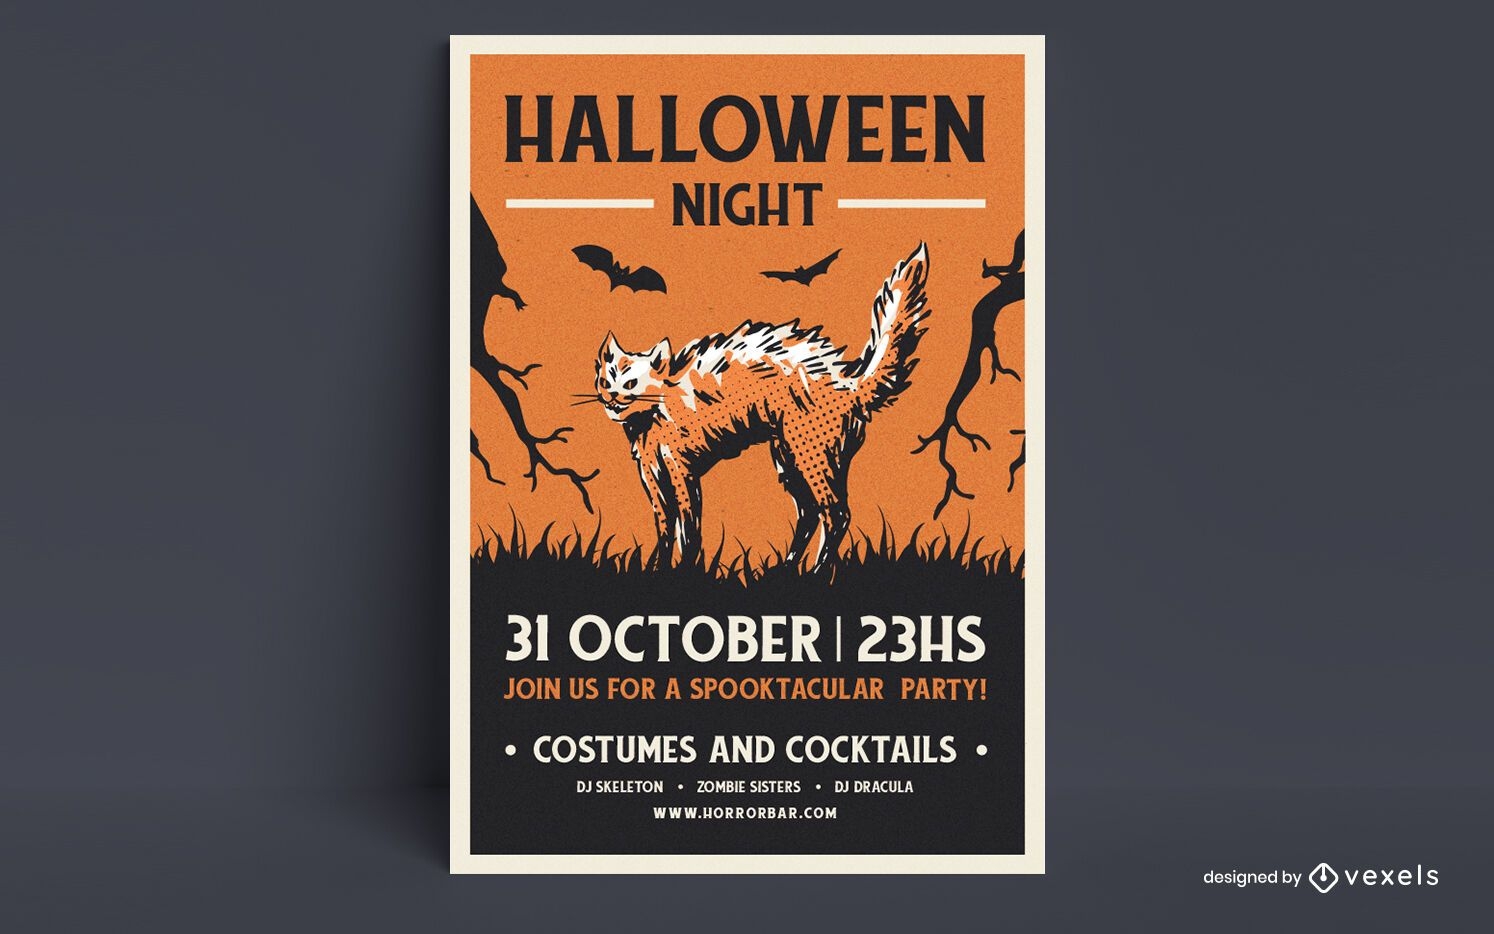 Halloween night poster design